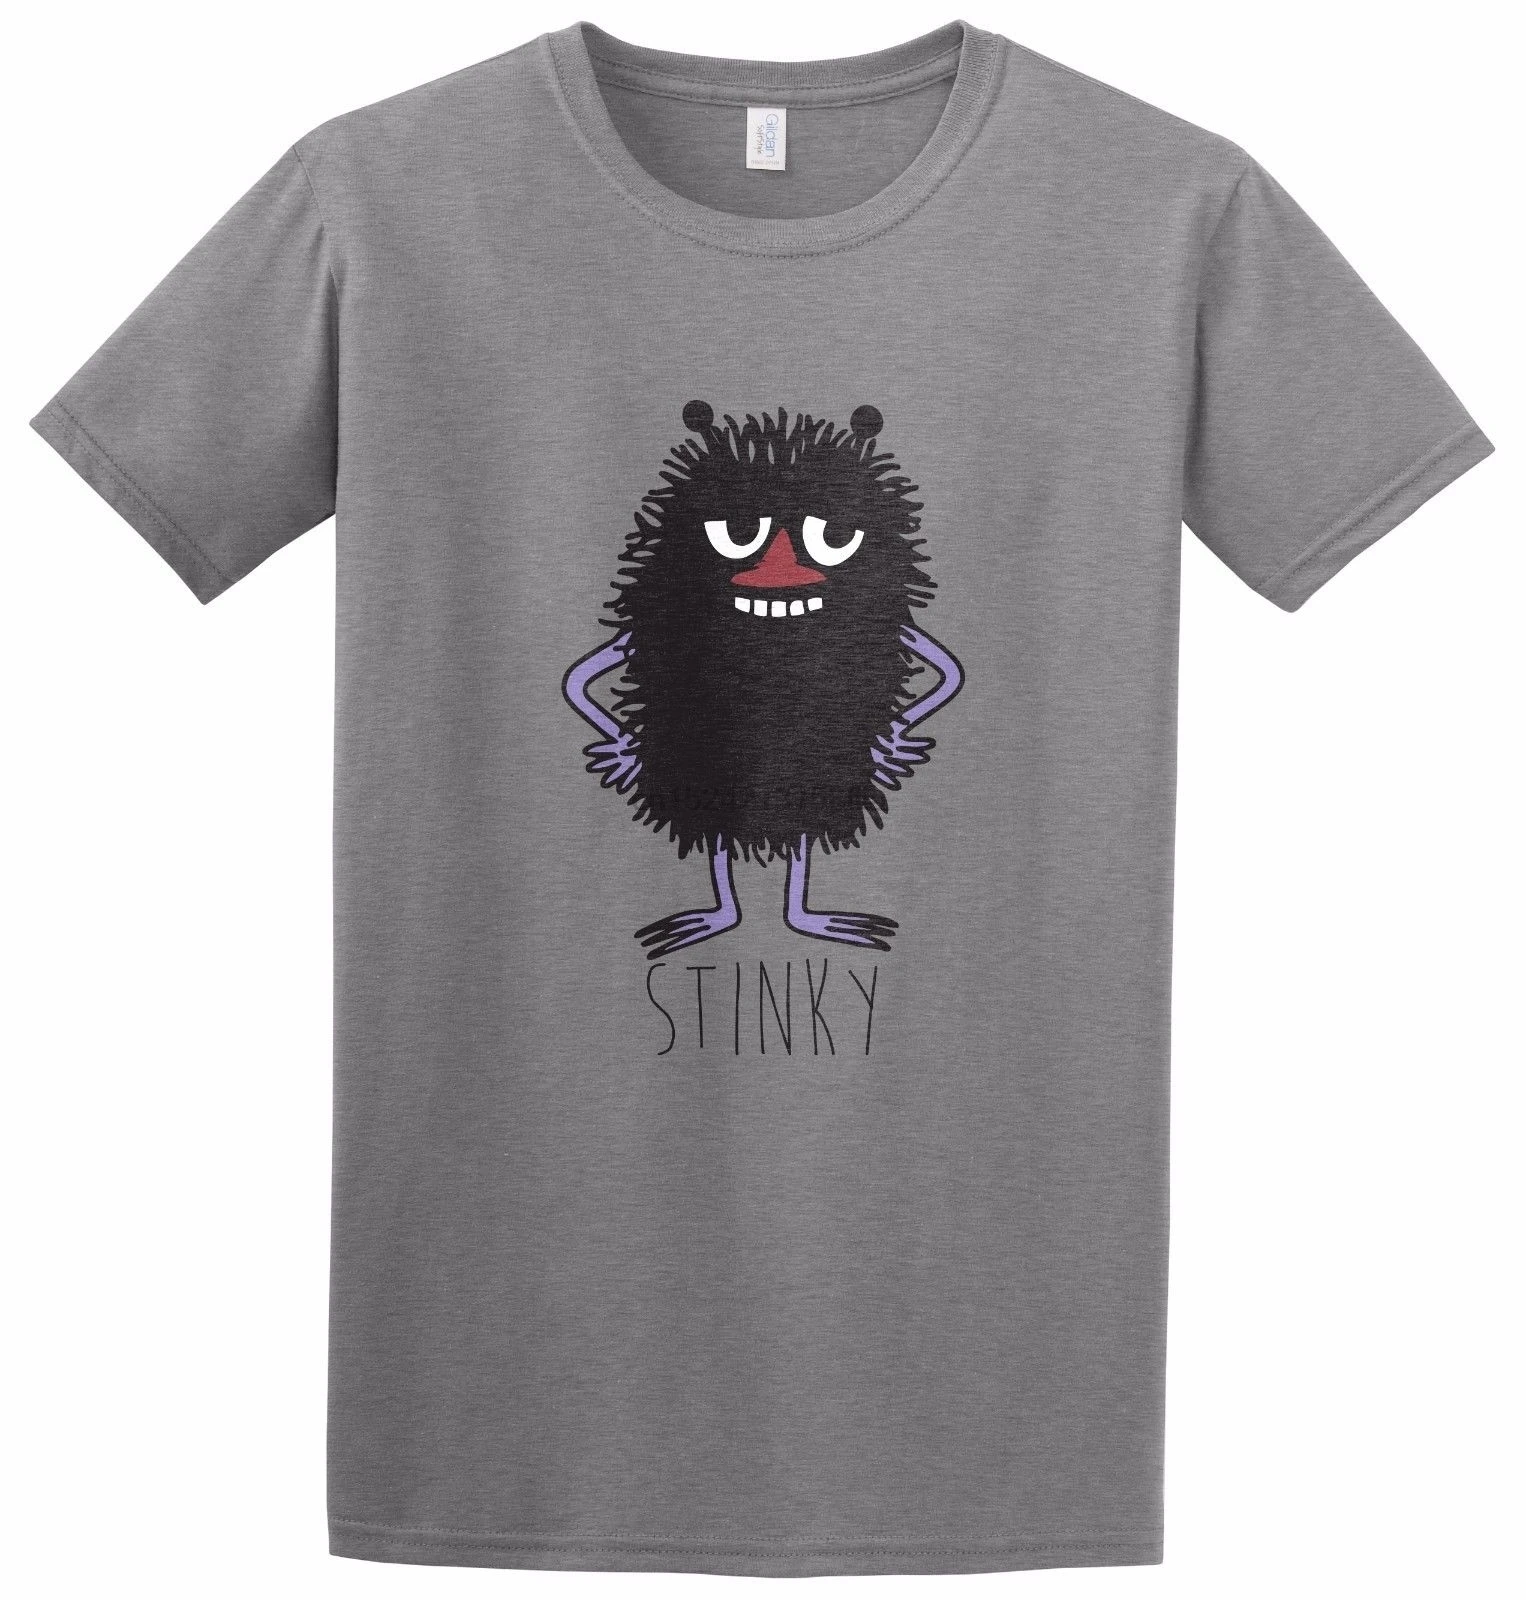 

Stinky Funny Tv Book Moomins Retro Gift Inspired T Shirt Top Tee 100% Cotton Humor Men Crewneck Tee Shirts Loose Trend